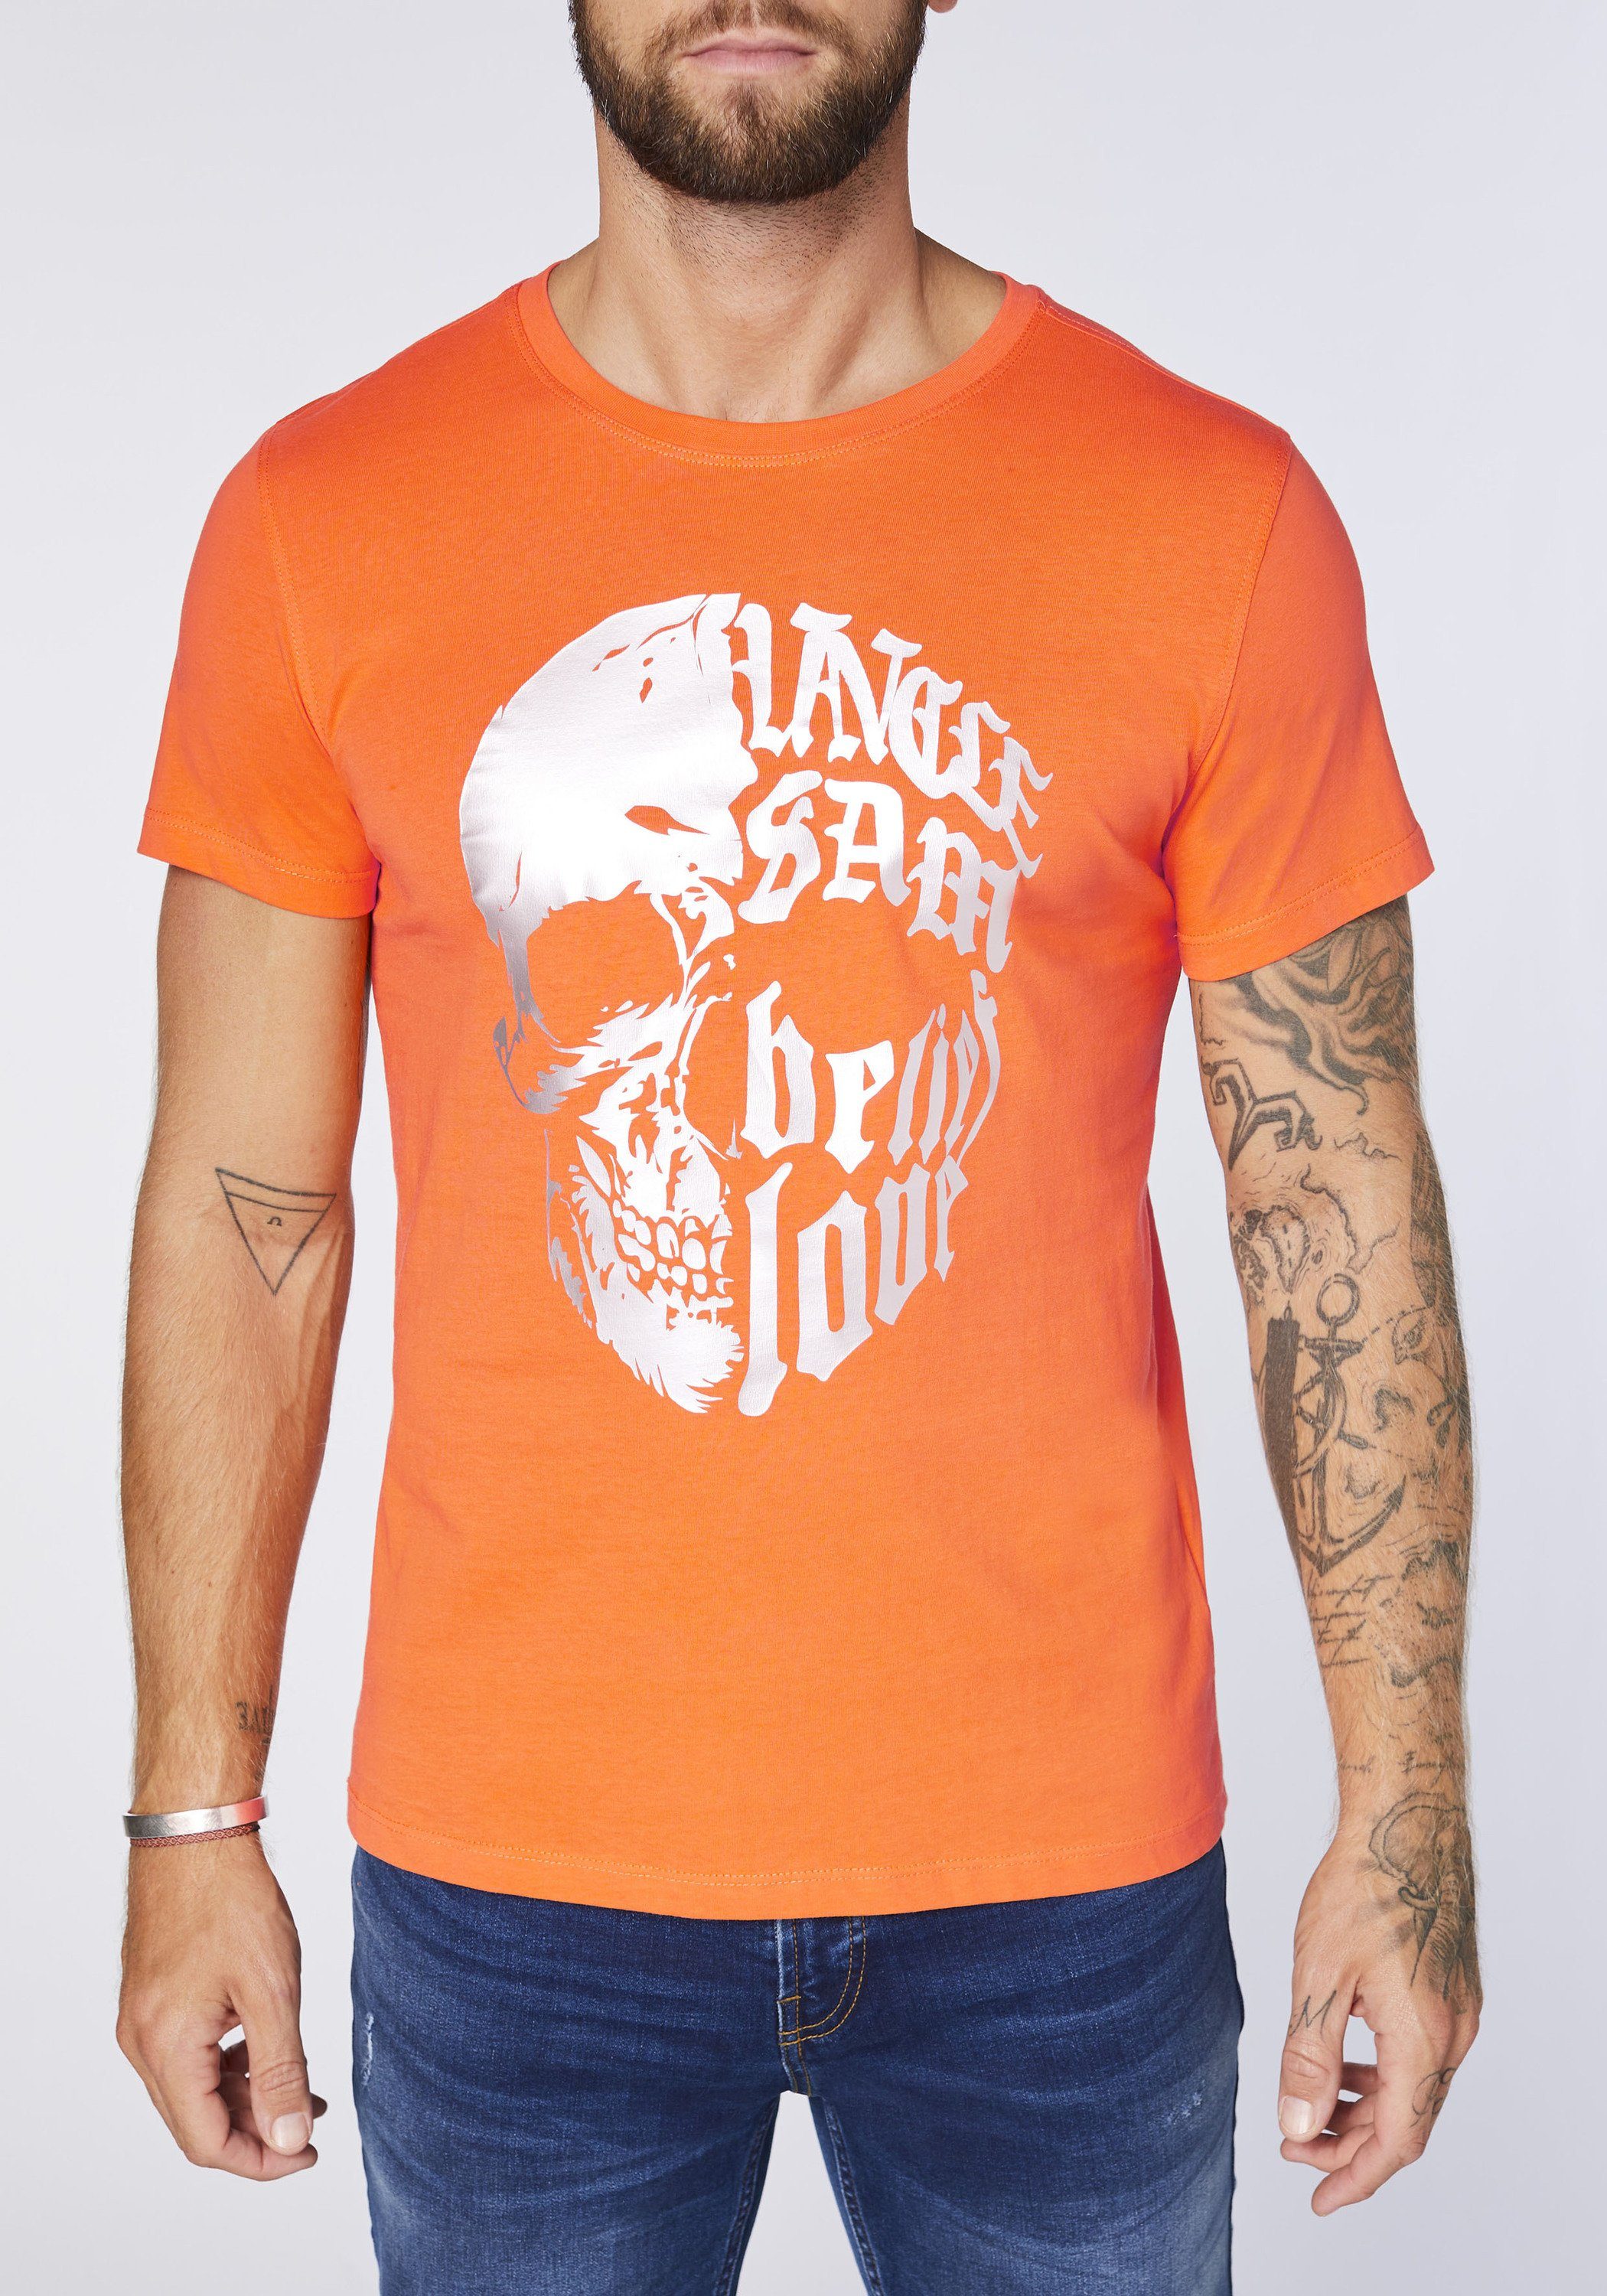 Sam Uncle 16-1362 Vermillon Print-Shirt aus Orange Baumwolle